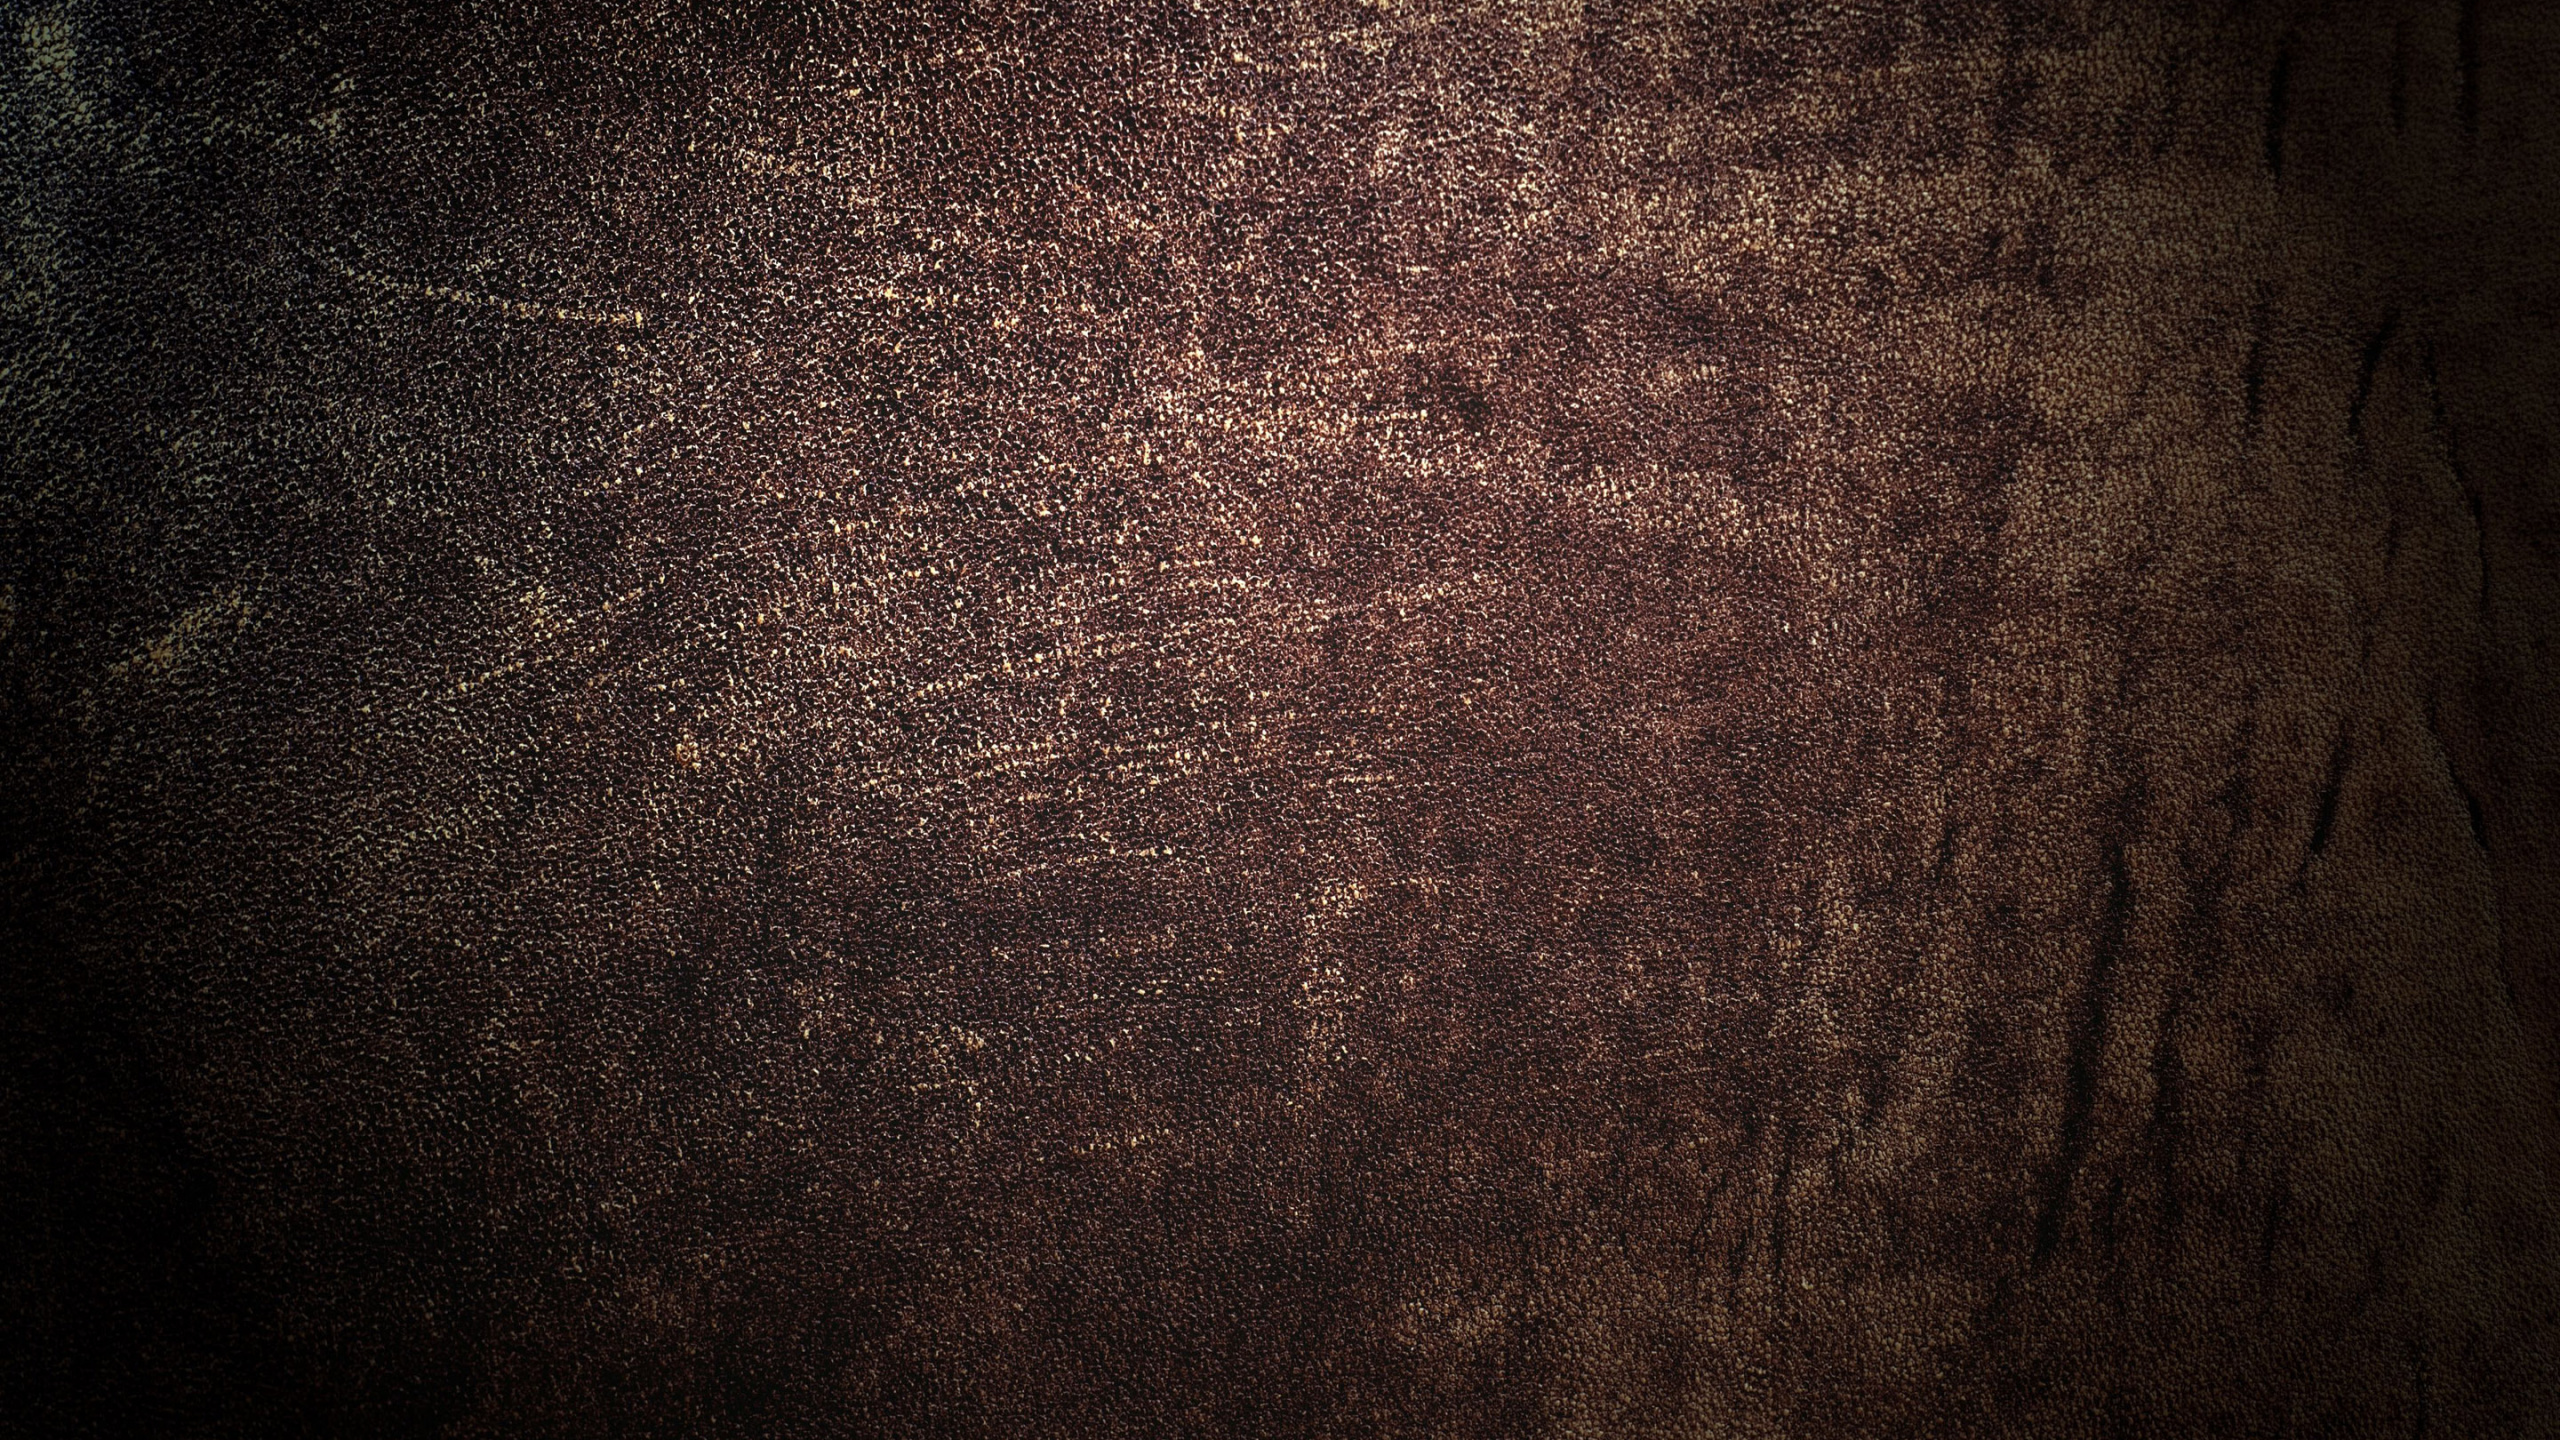 Textile Noir en Gros Plan Image. Wallpaper in 2560x1440 Resolution